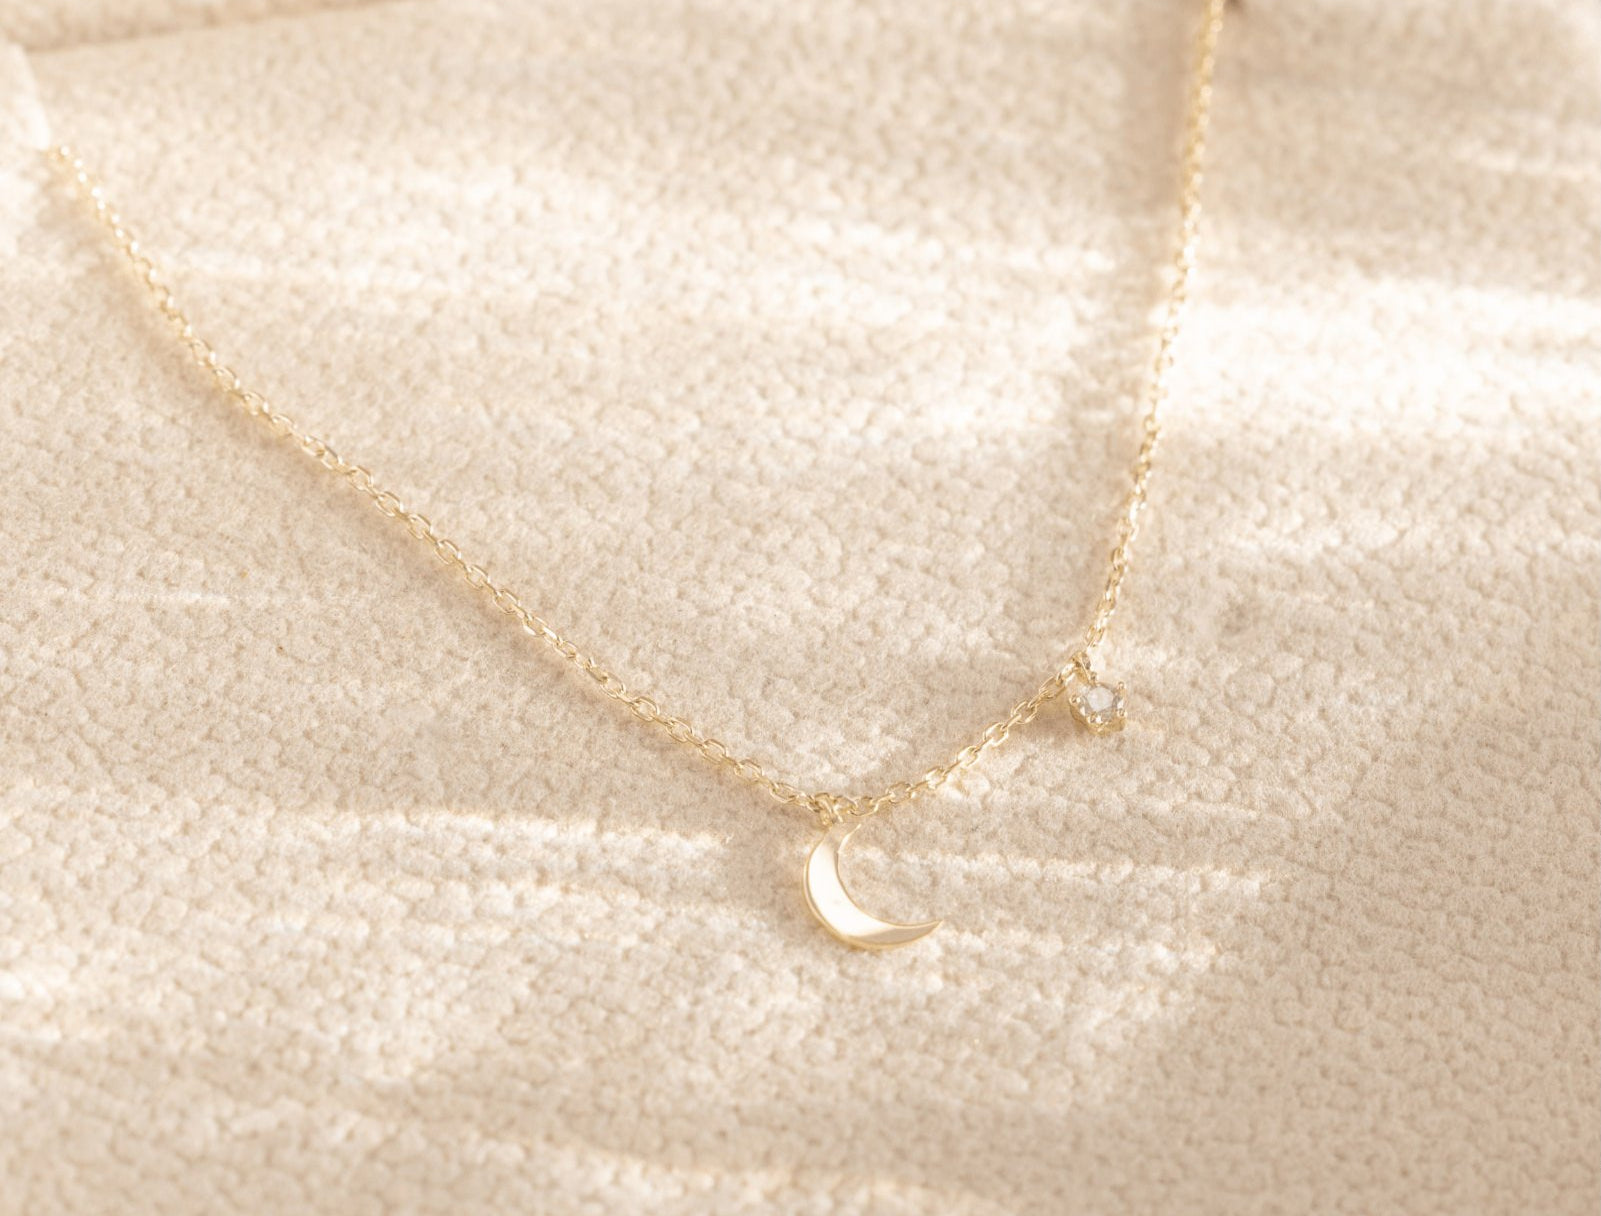 Picture of Luna Rae Solid 9k Gold Luna Necklace